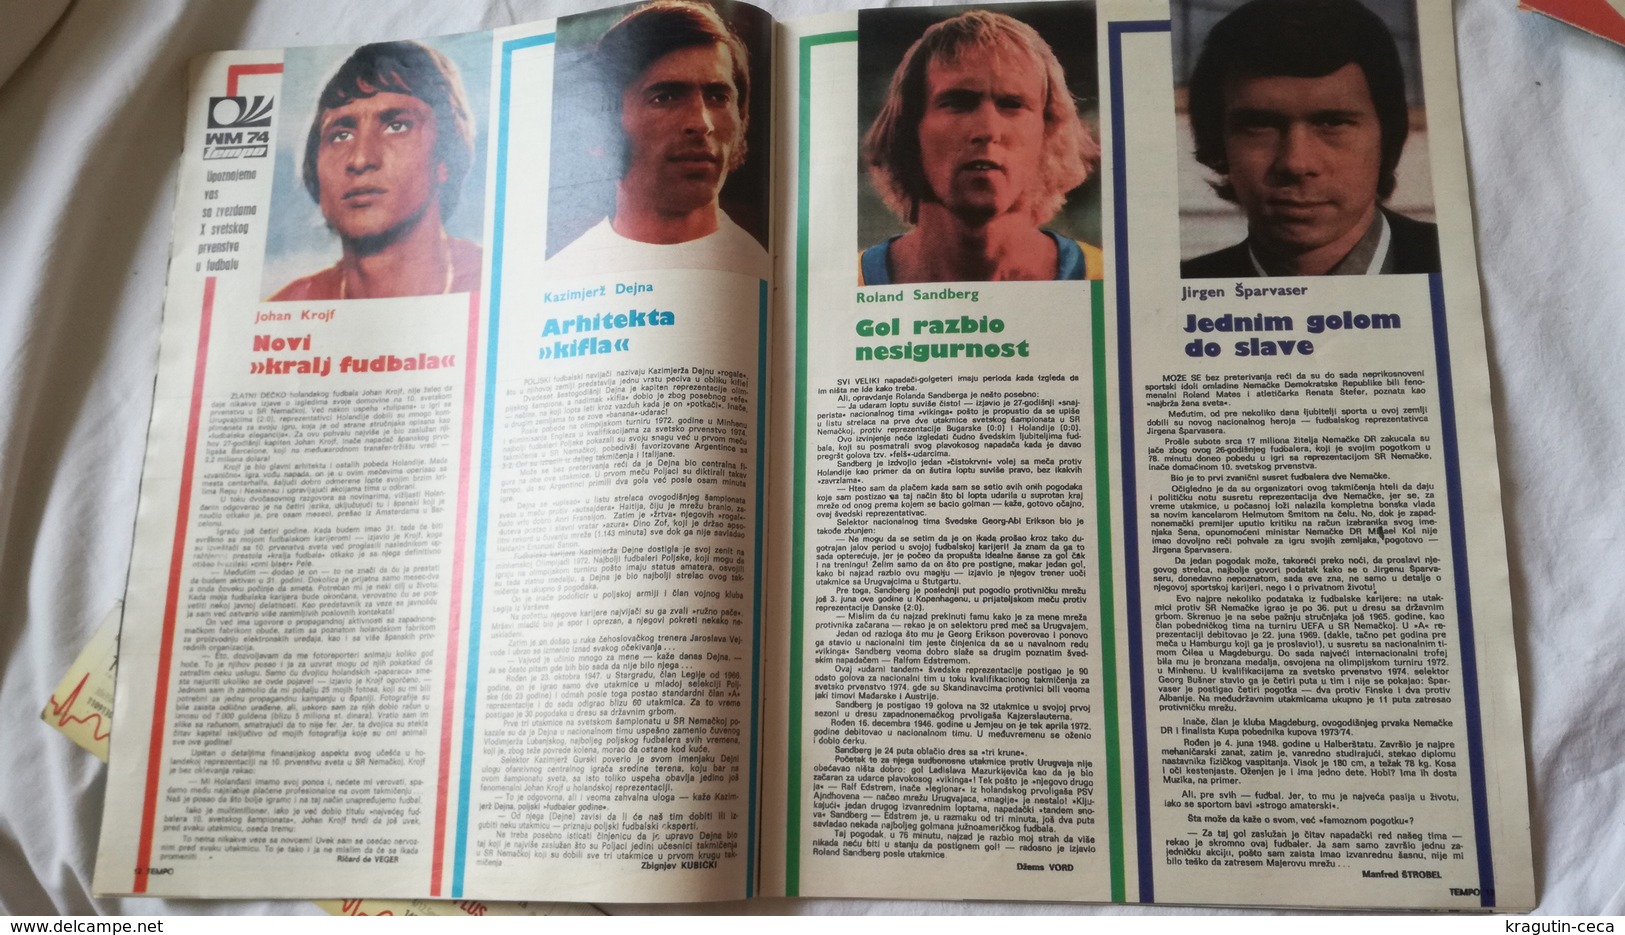 1974 TEMPO YUGOSLAVIA SERBIA SPORT FOOTBALL MAGAZINE NEWSPAPER WM74 CHAMPIONSHIP DZAJIC FOGST MUNDIAL RIJEKA Johan Johan